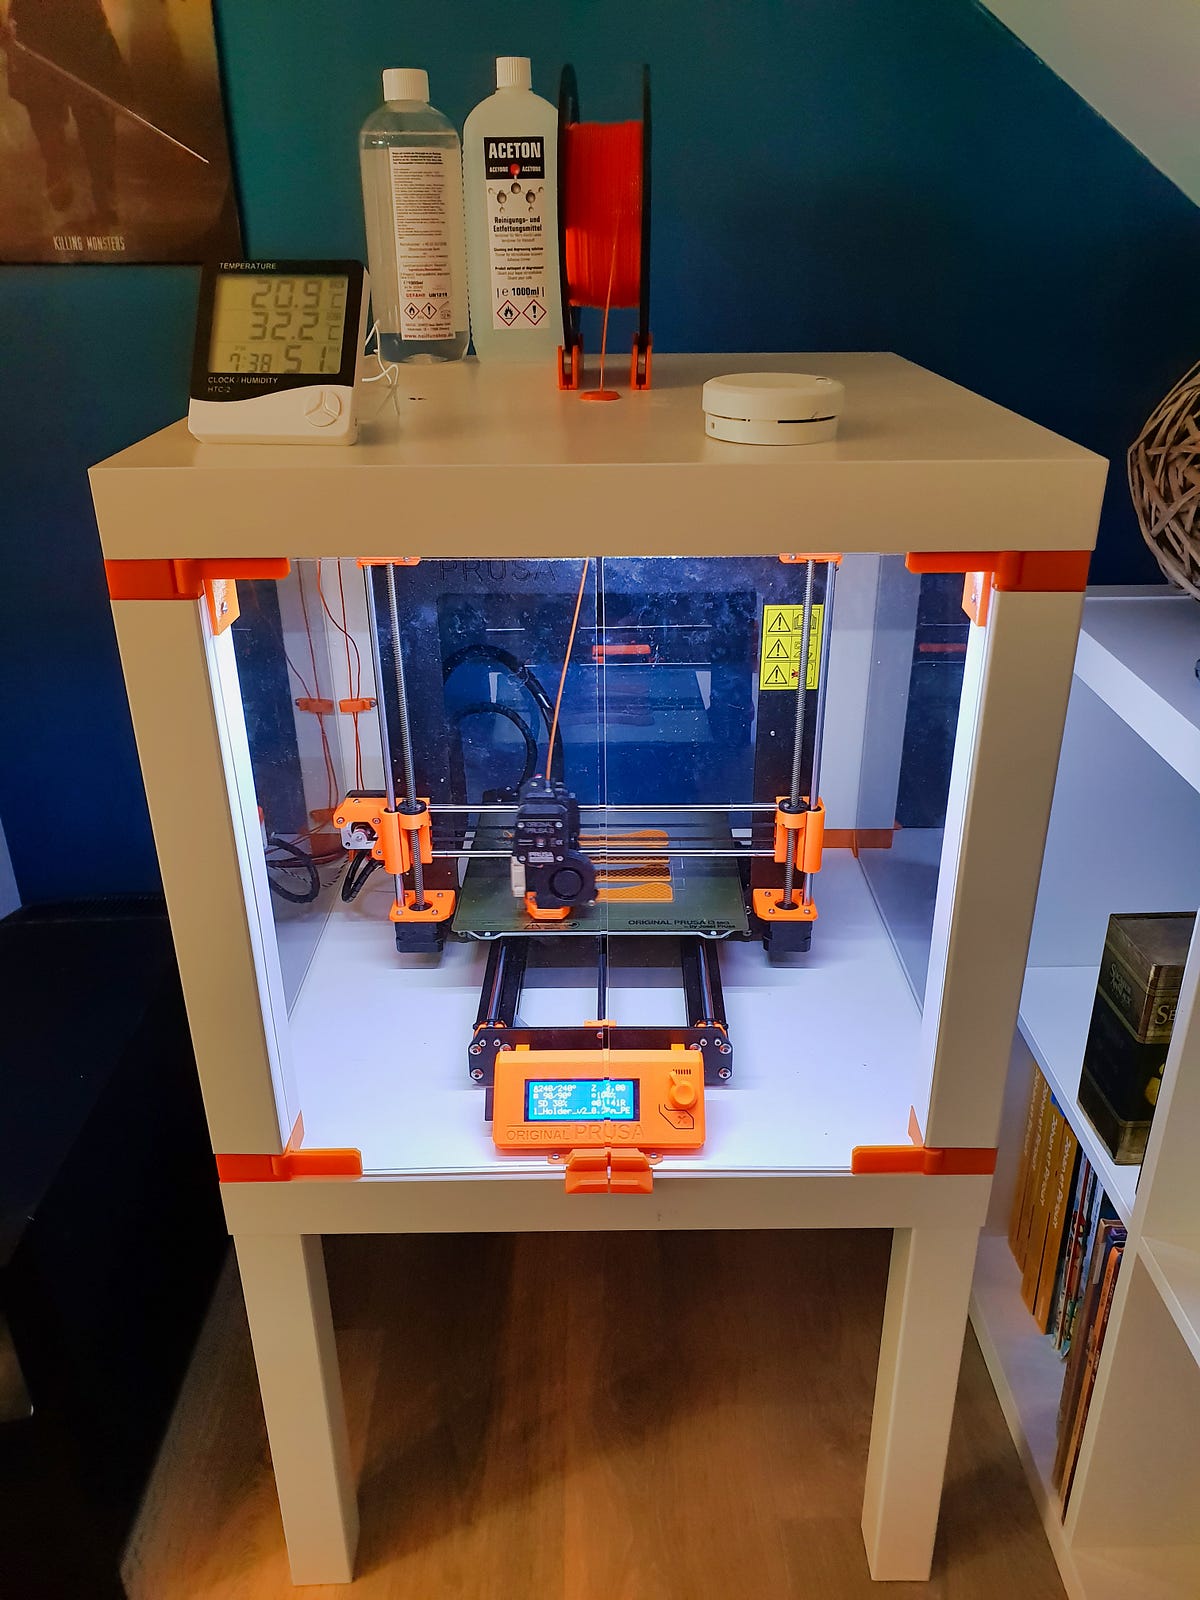 Créer un enclos pour son imprimante 3D pas cher | by Benjamin Blampain |  Medium